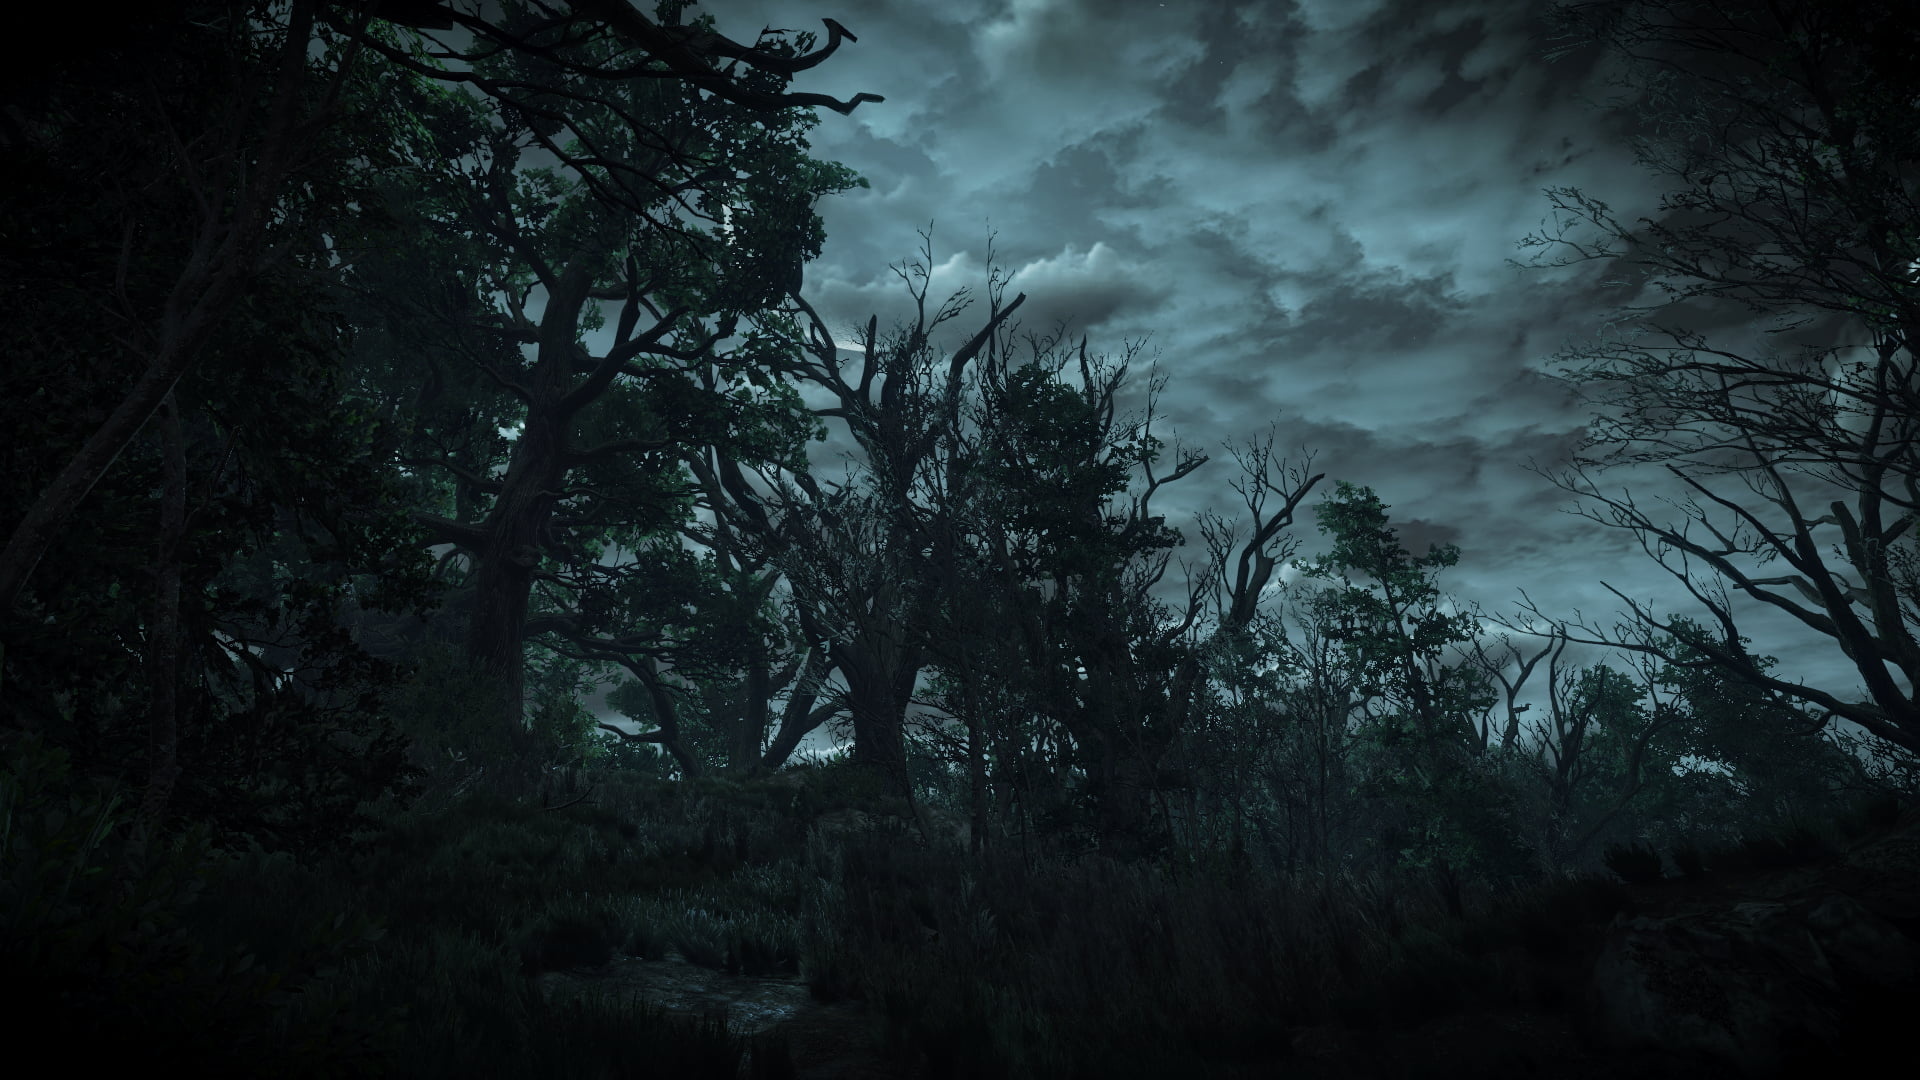 Gray Cloudy Sky: Dark gloomy forest, Rain-bearing cloud, Twilight. 1920x1080 Full HD Wallpaper.